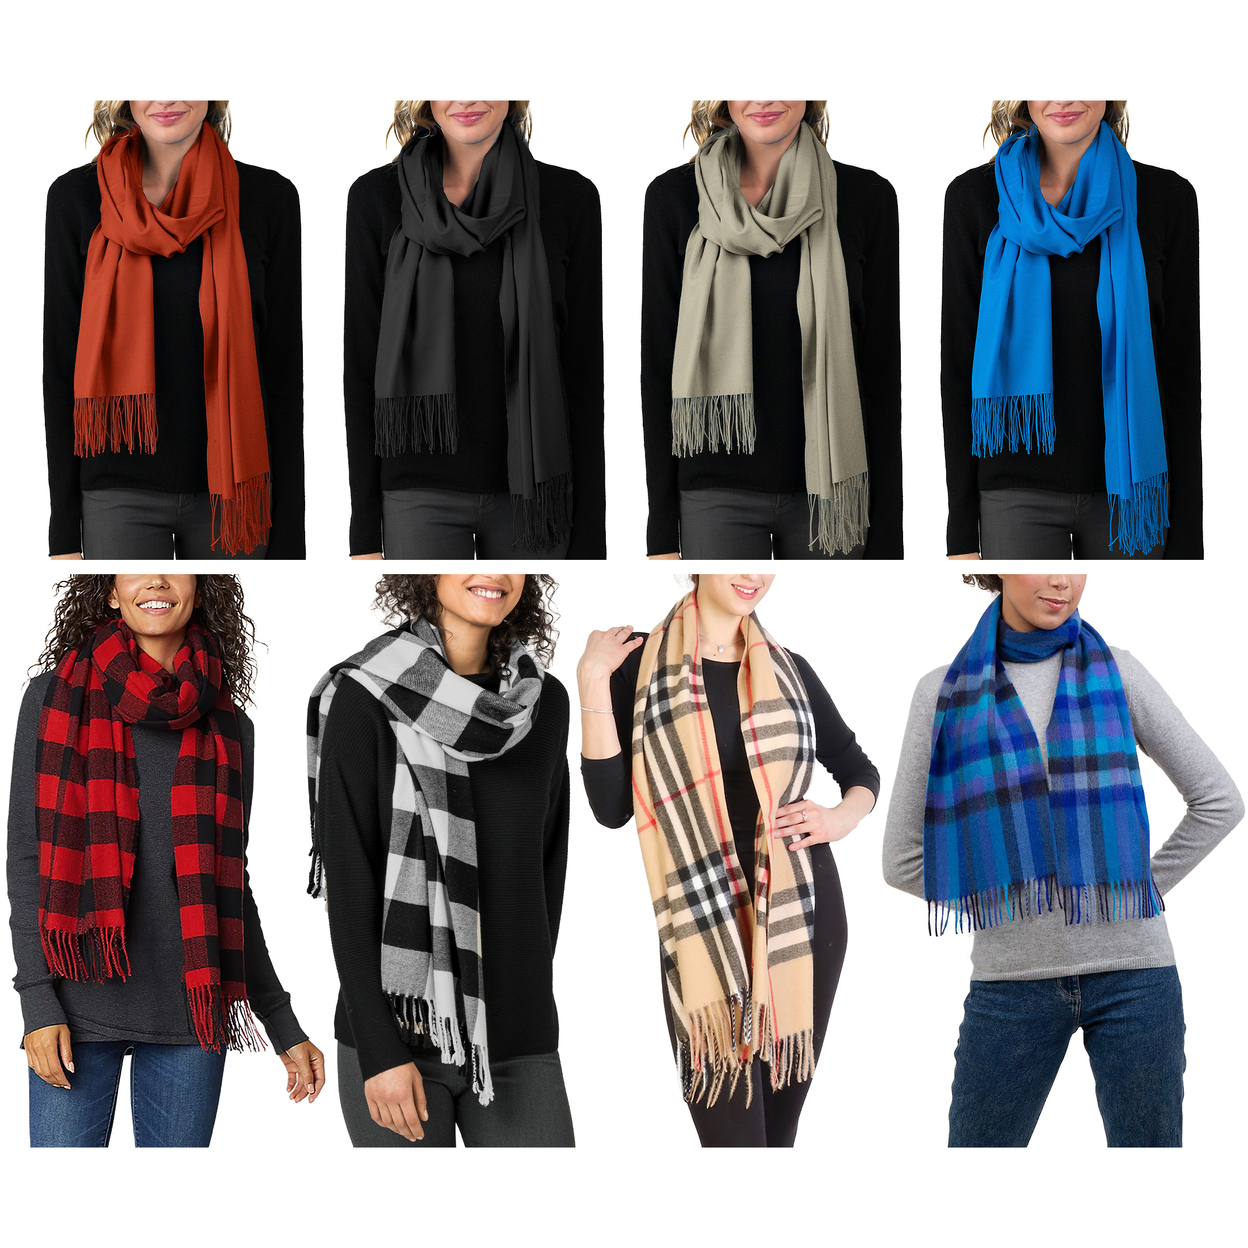 4-Pack: Women's Ultra Soft Neutral & Bright Cashmere Feel Winter Warm Scarfs - Neutral